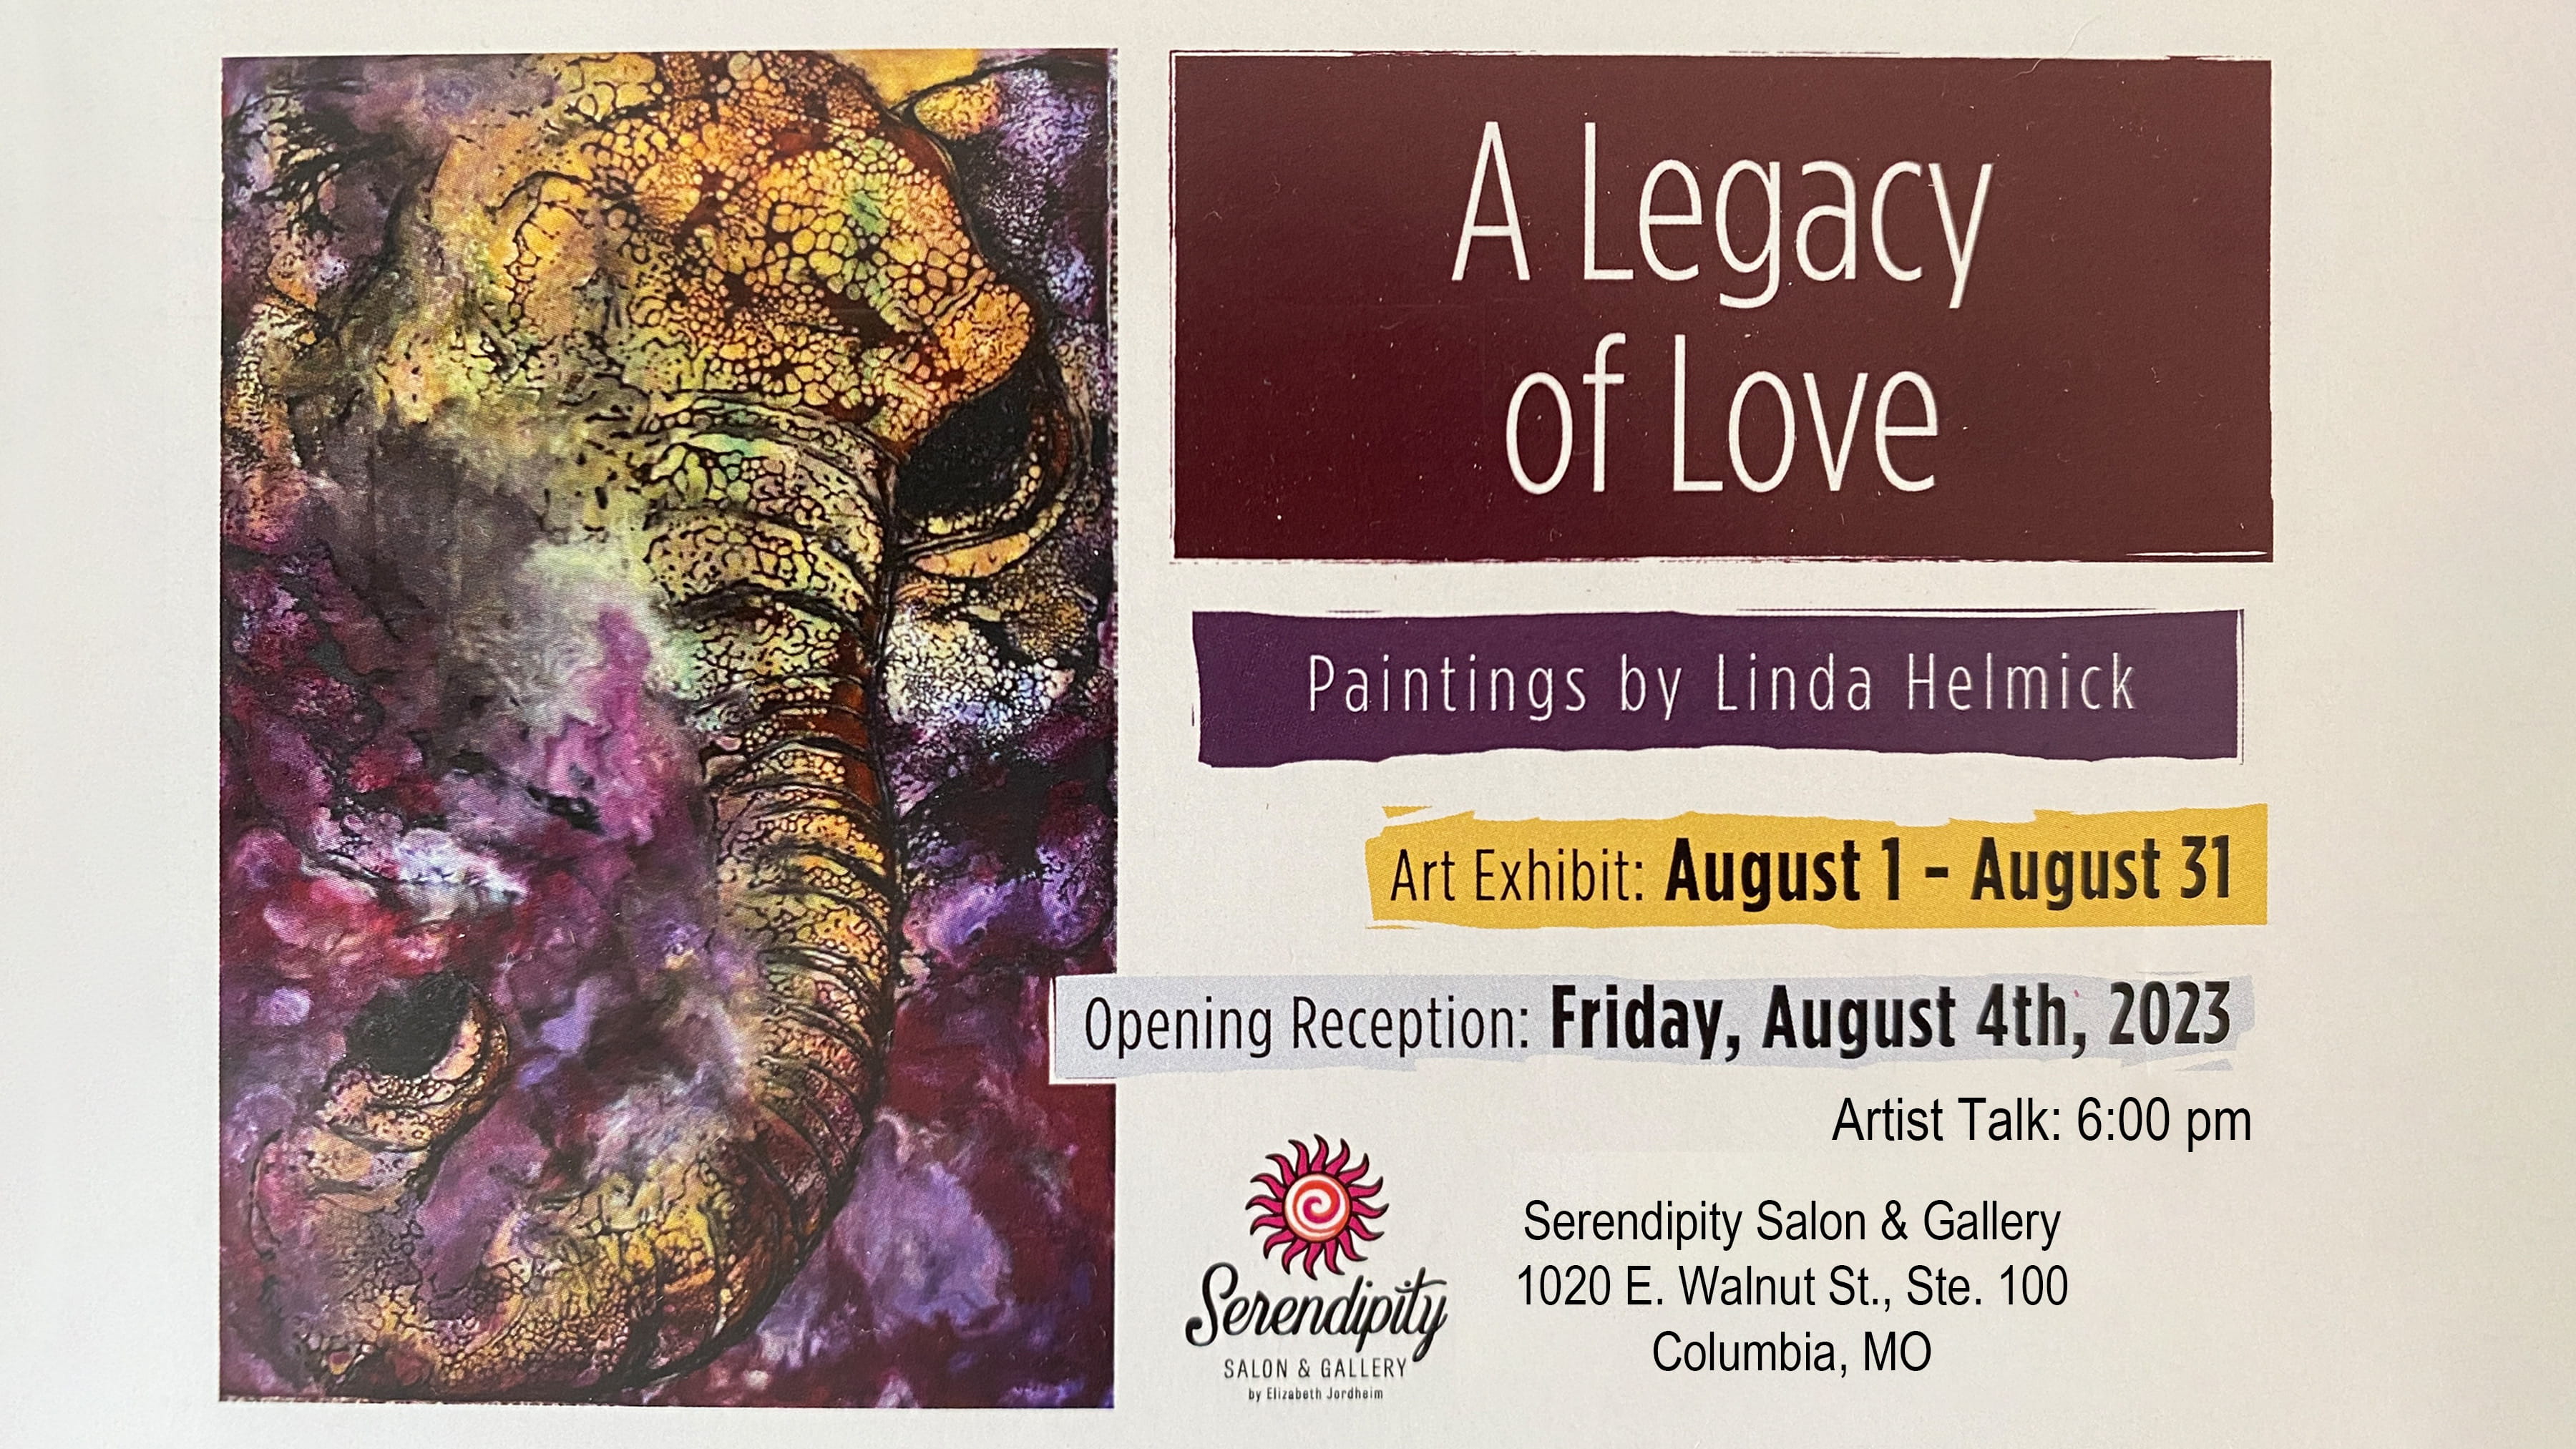 A Legacy of Love art exhibit